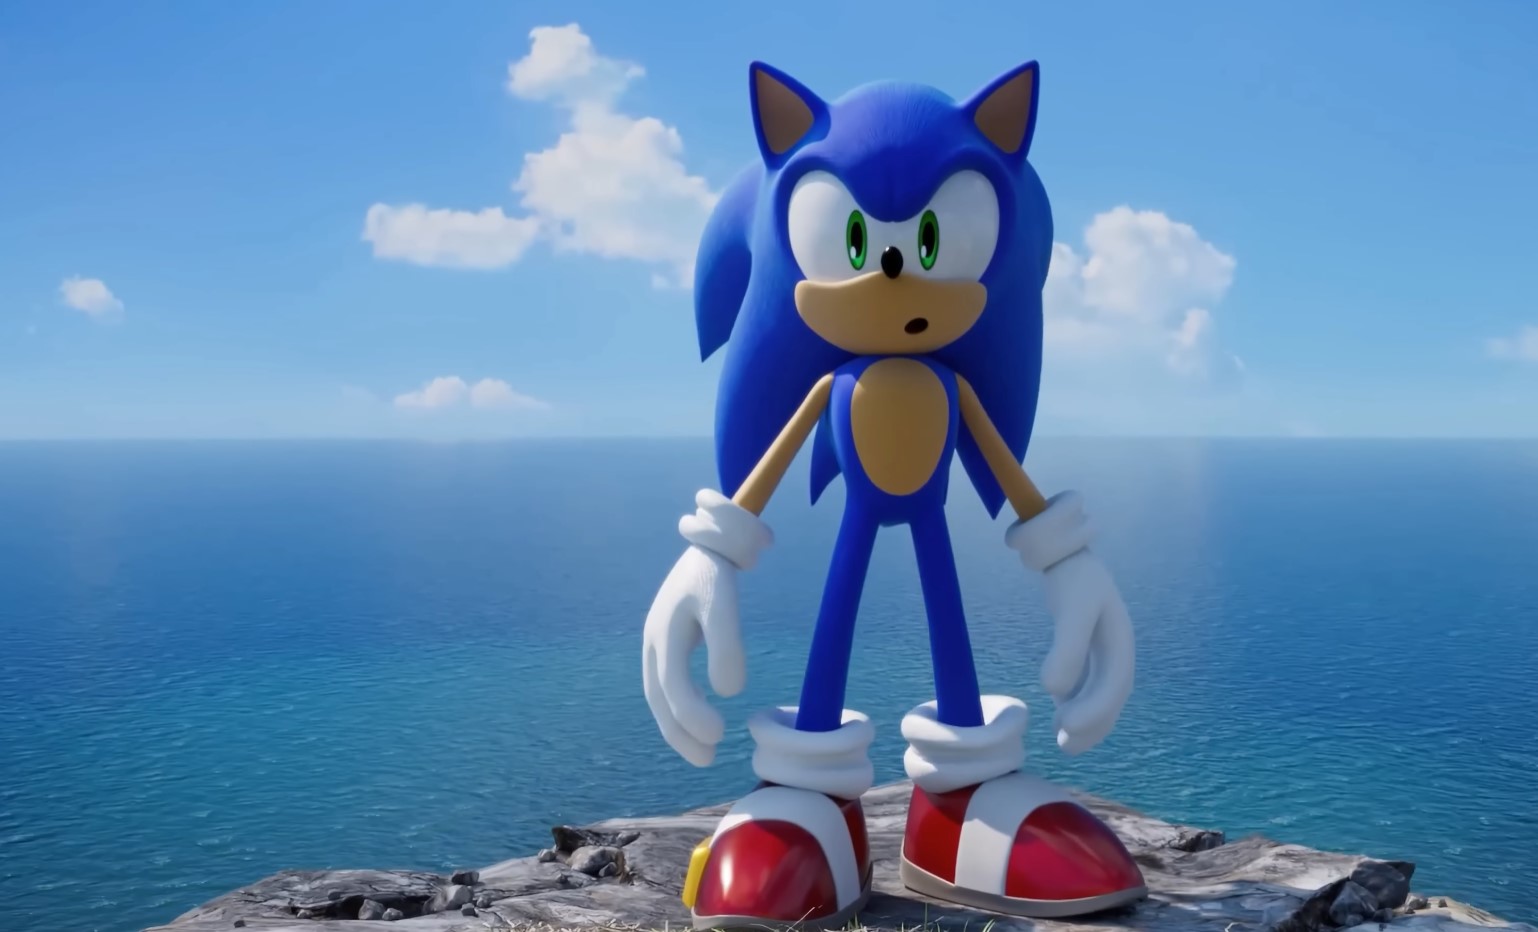 Sonic Frontiers Reveals New Final Horizon Animated Trailer